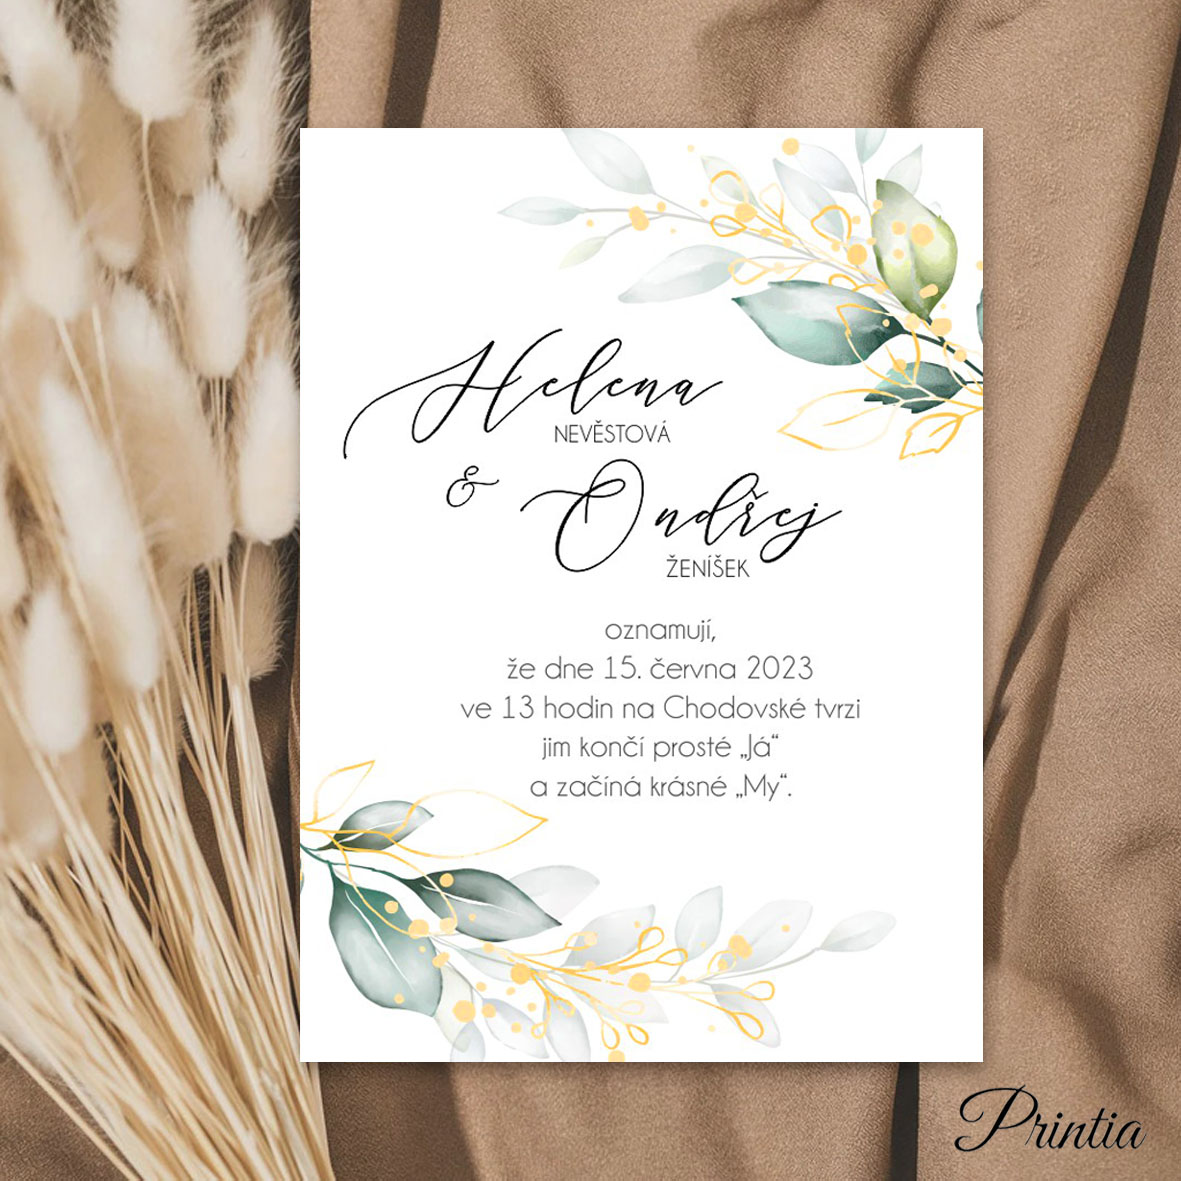 Wedding invitation with golden leafs